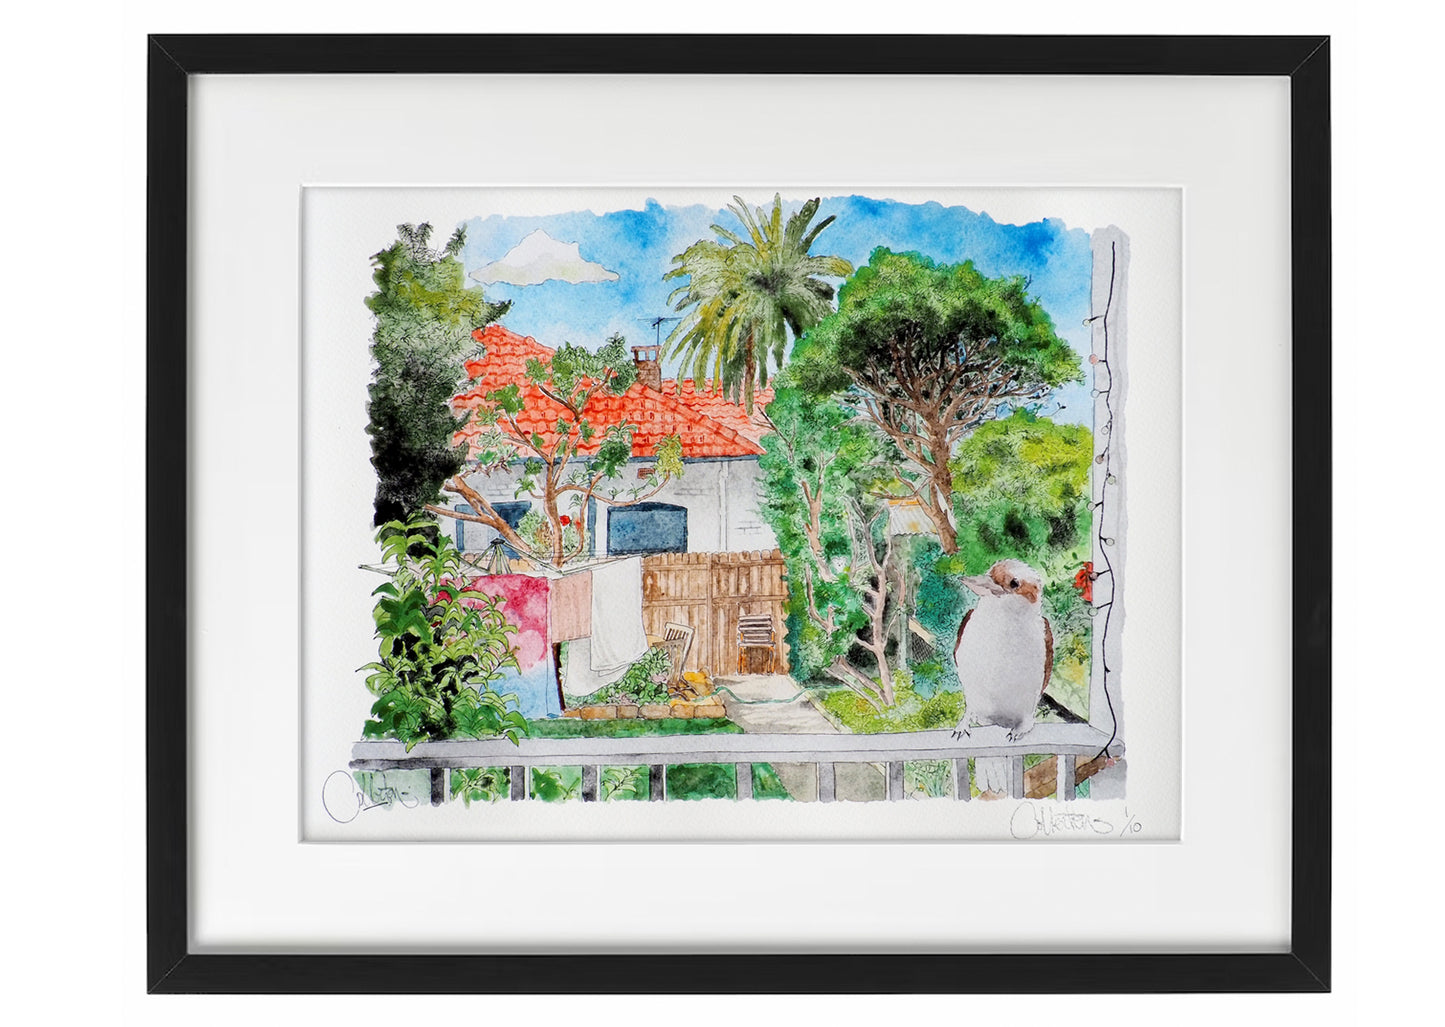 Backyard at 9 George with Kookaburra - Giclee Print